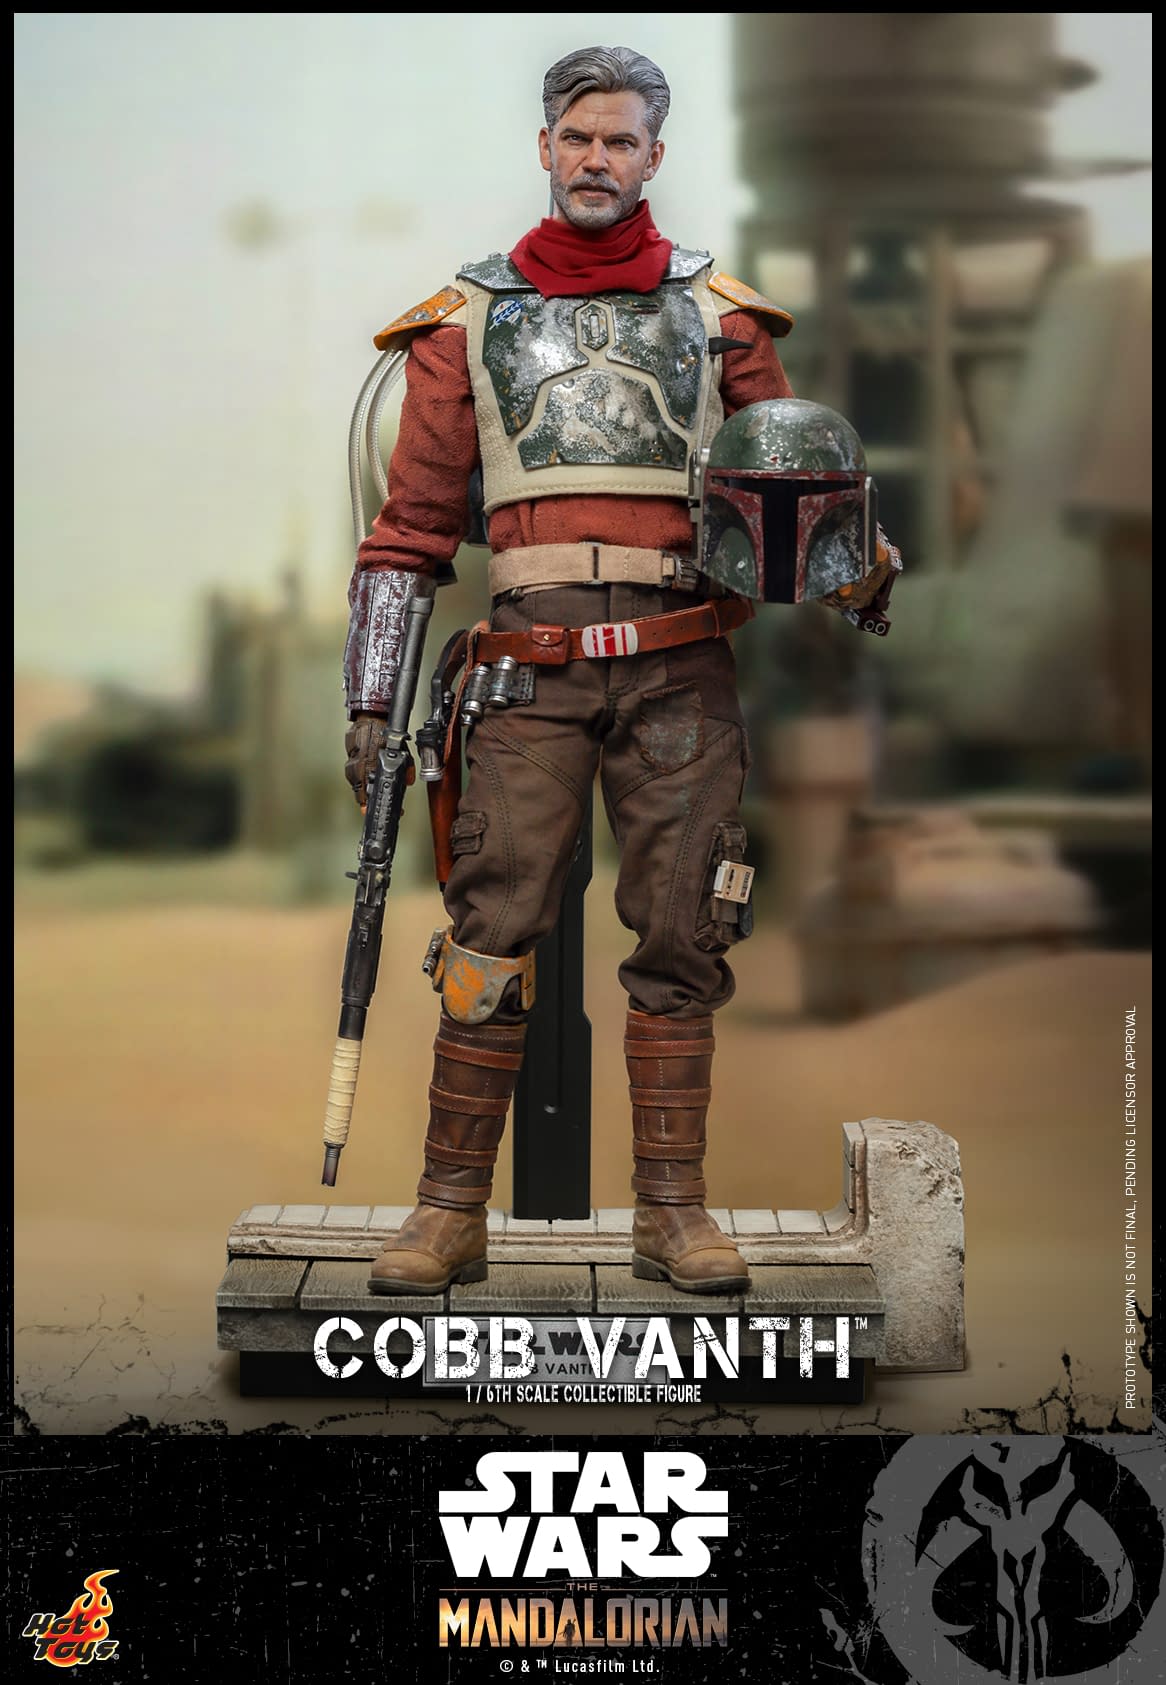 Star Wars: The Mandalorian Cobb Vanth Finally Arrives at Hot Toys